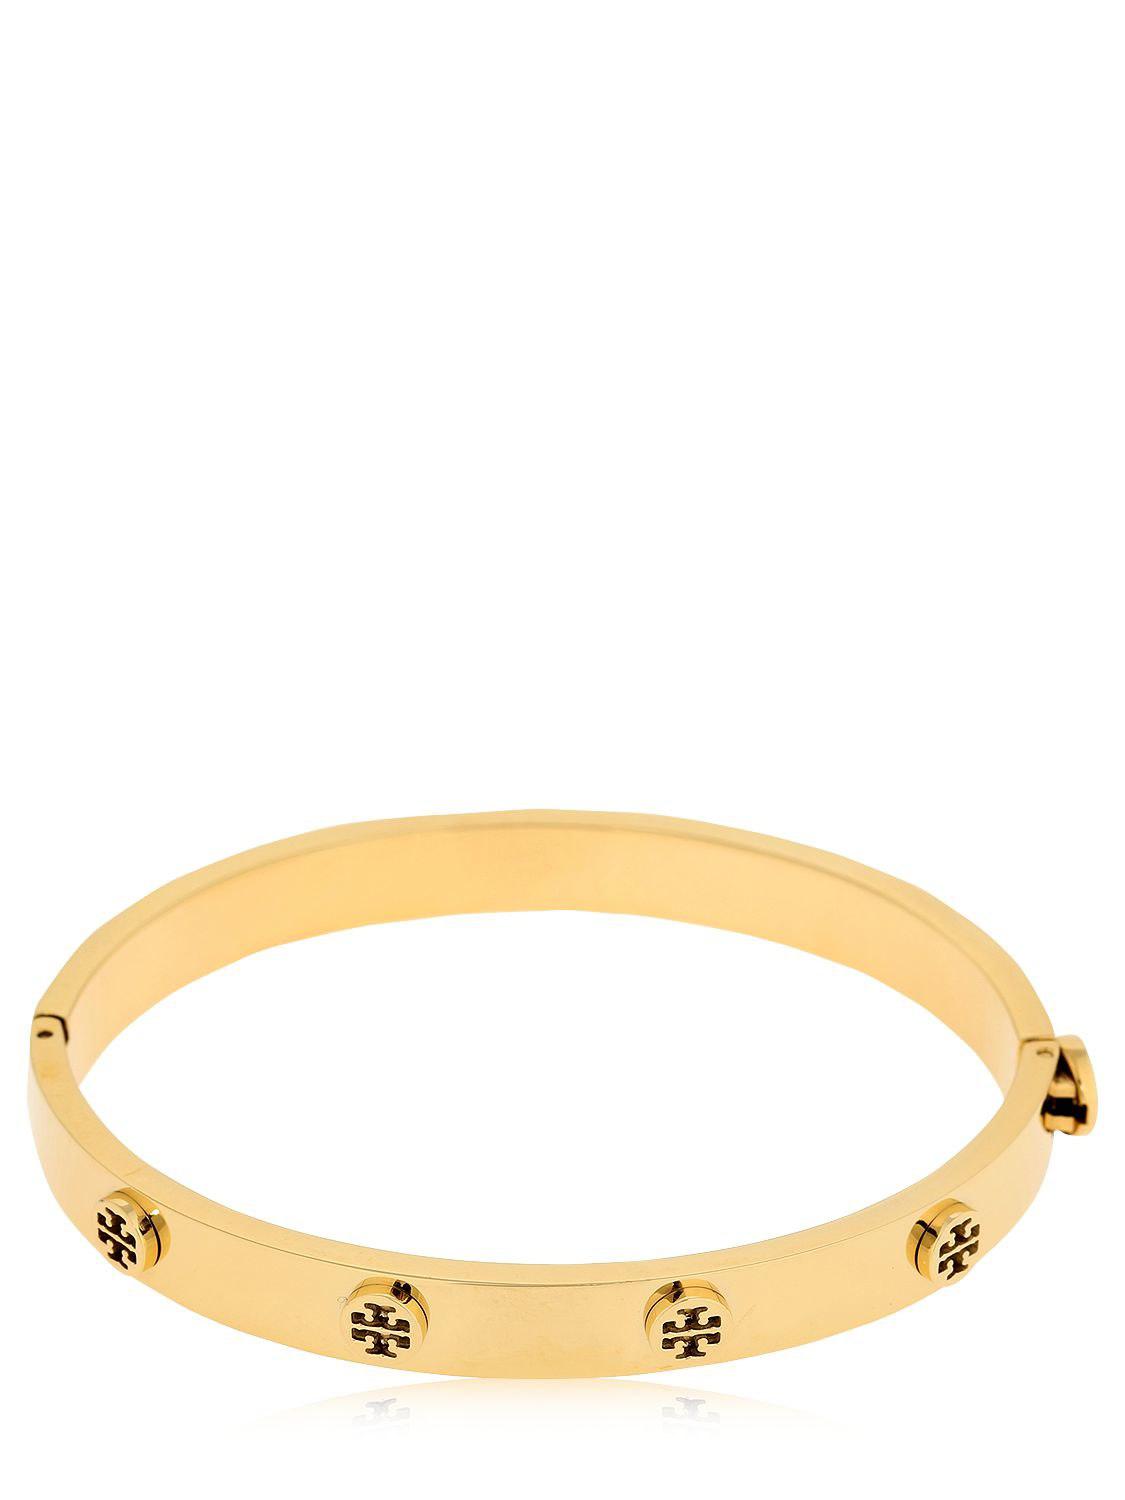 Tory Burch Miller Stud Hinge Bracelet in Gold (Metallic) | Lyst 